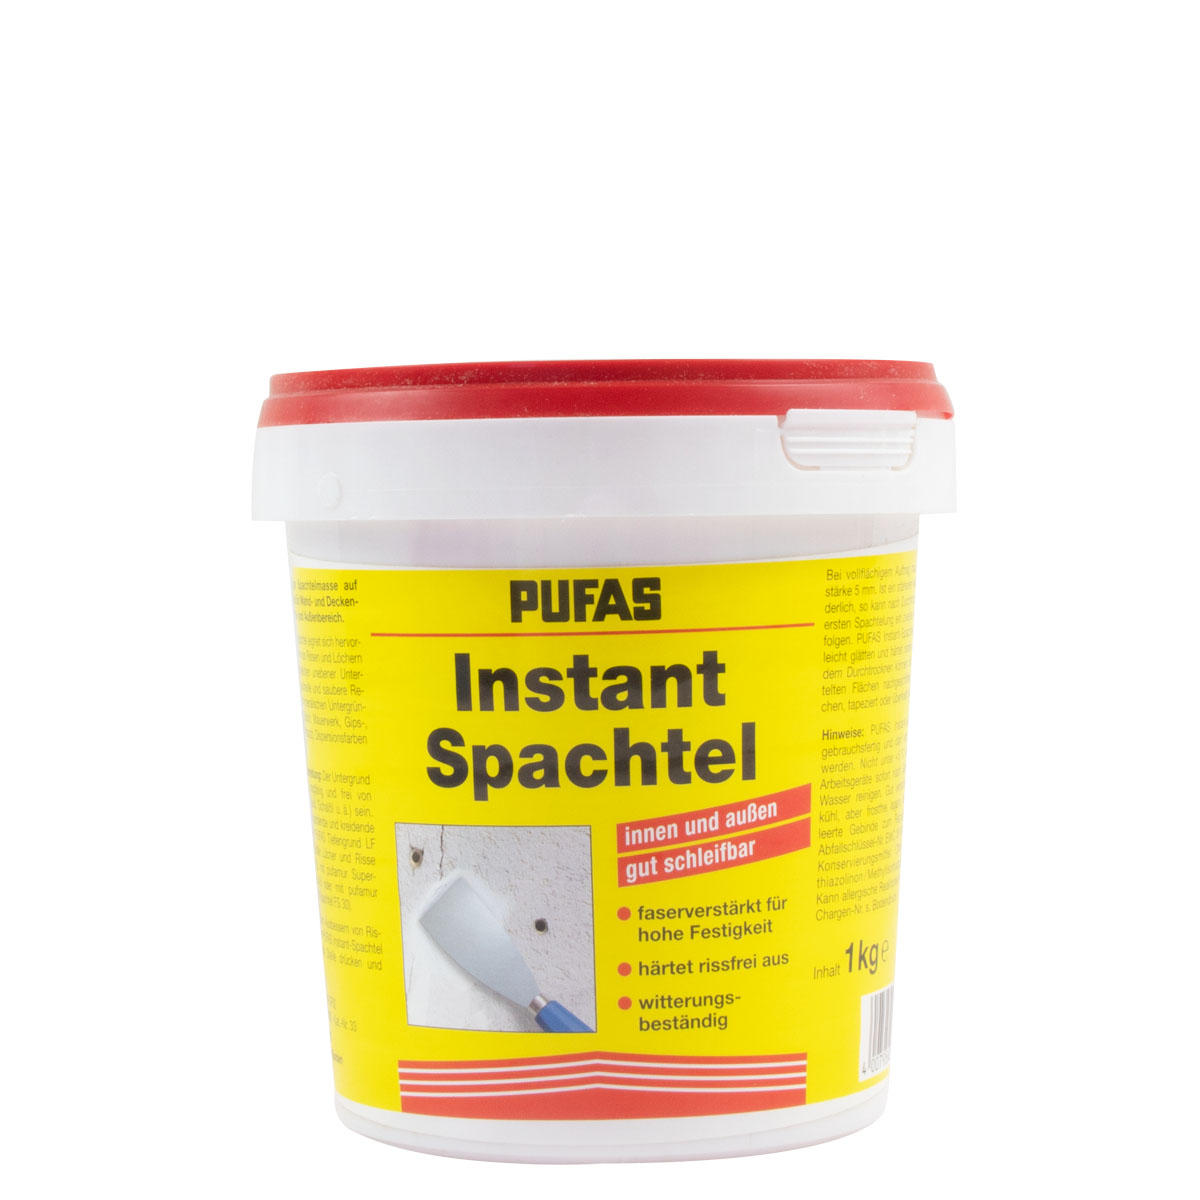 Pufas_instant-spachtel_1kg_gross